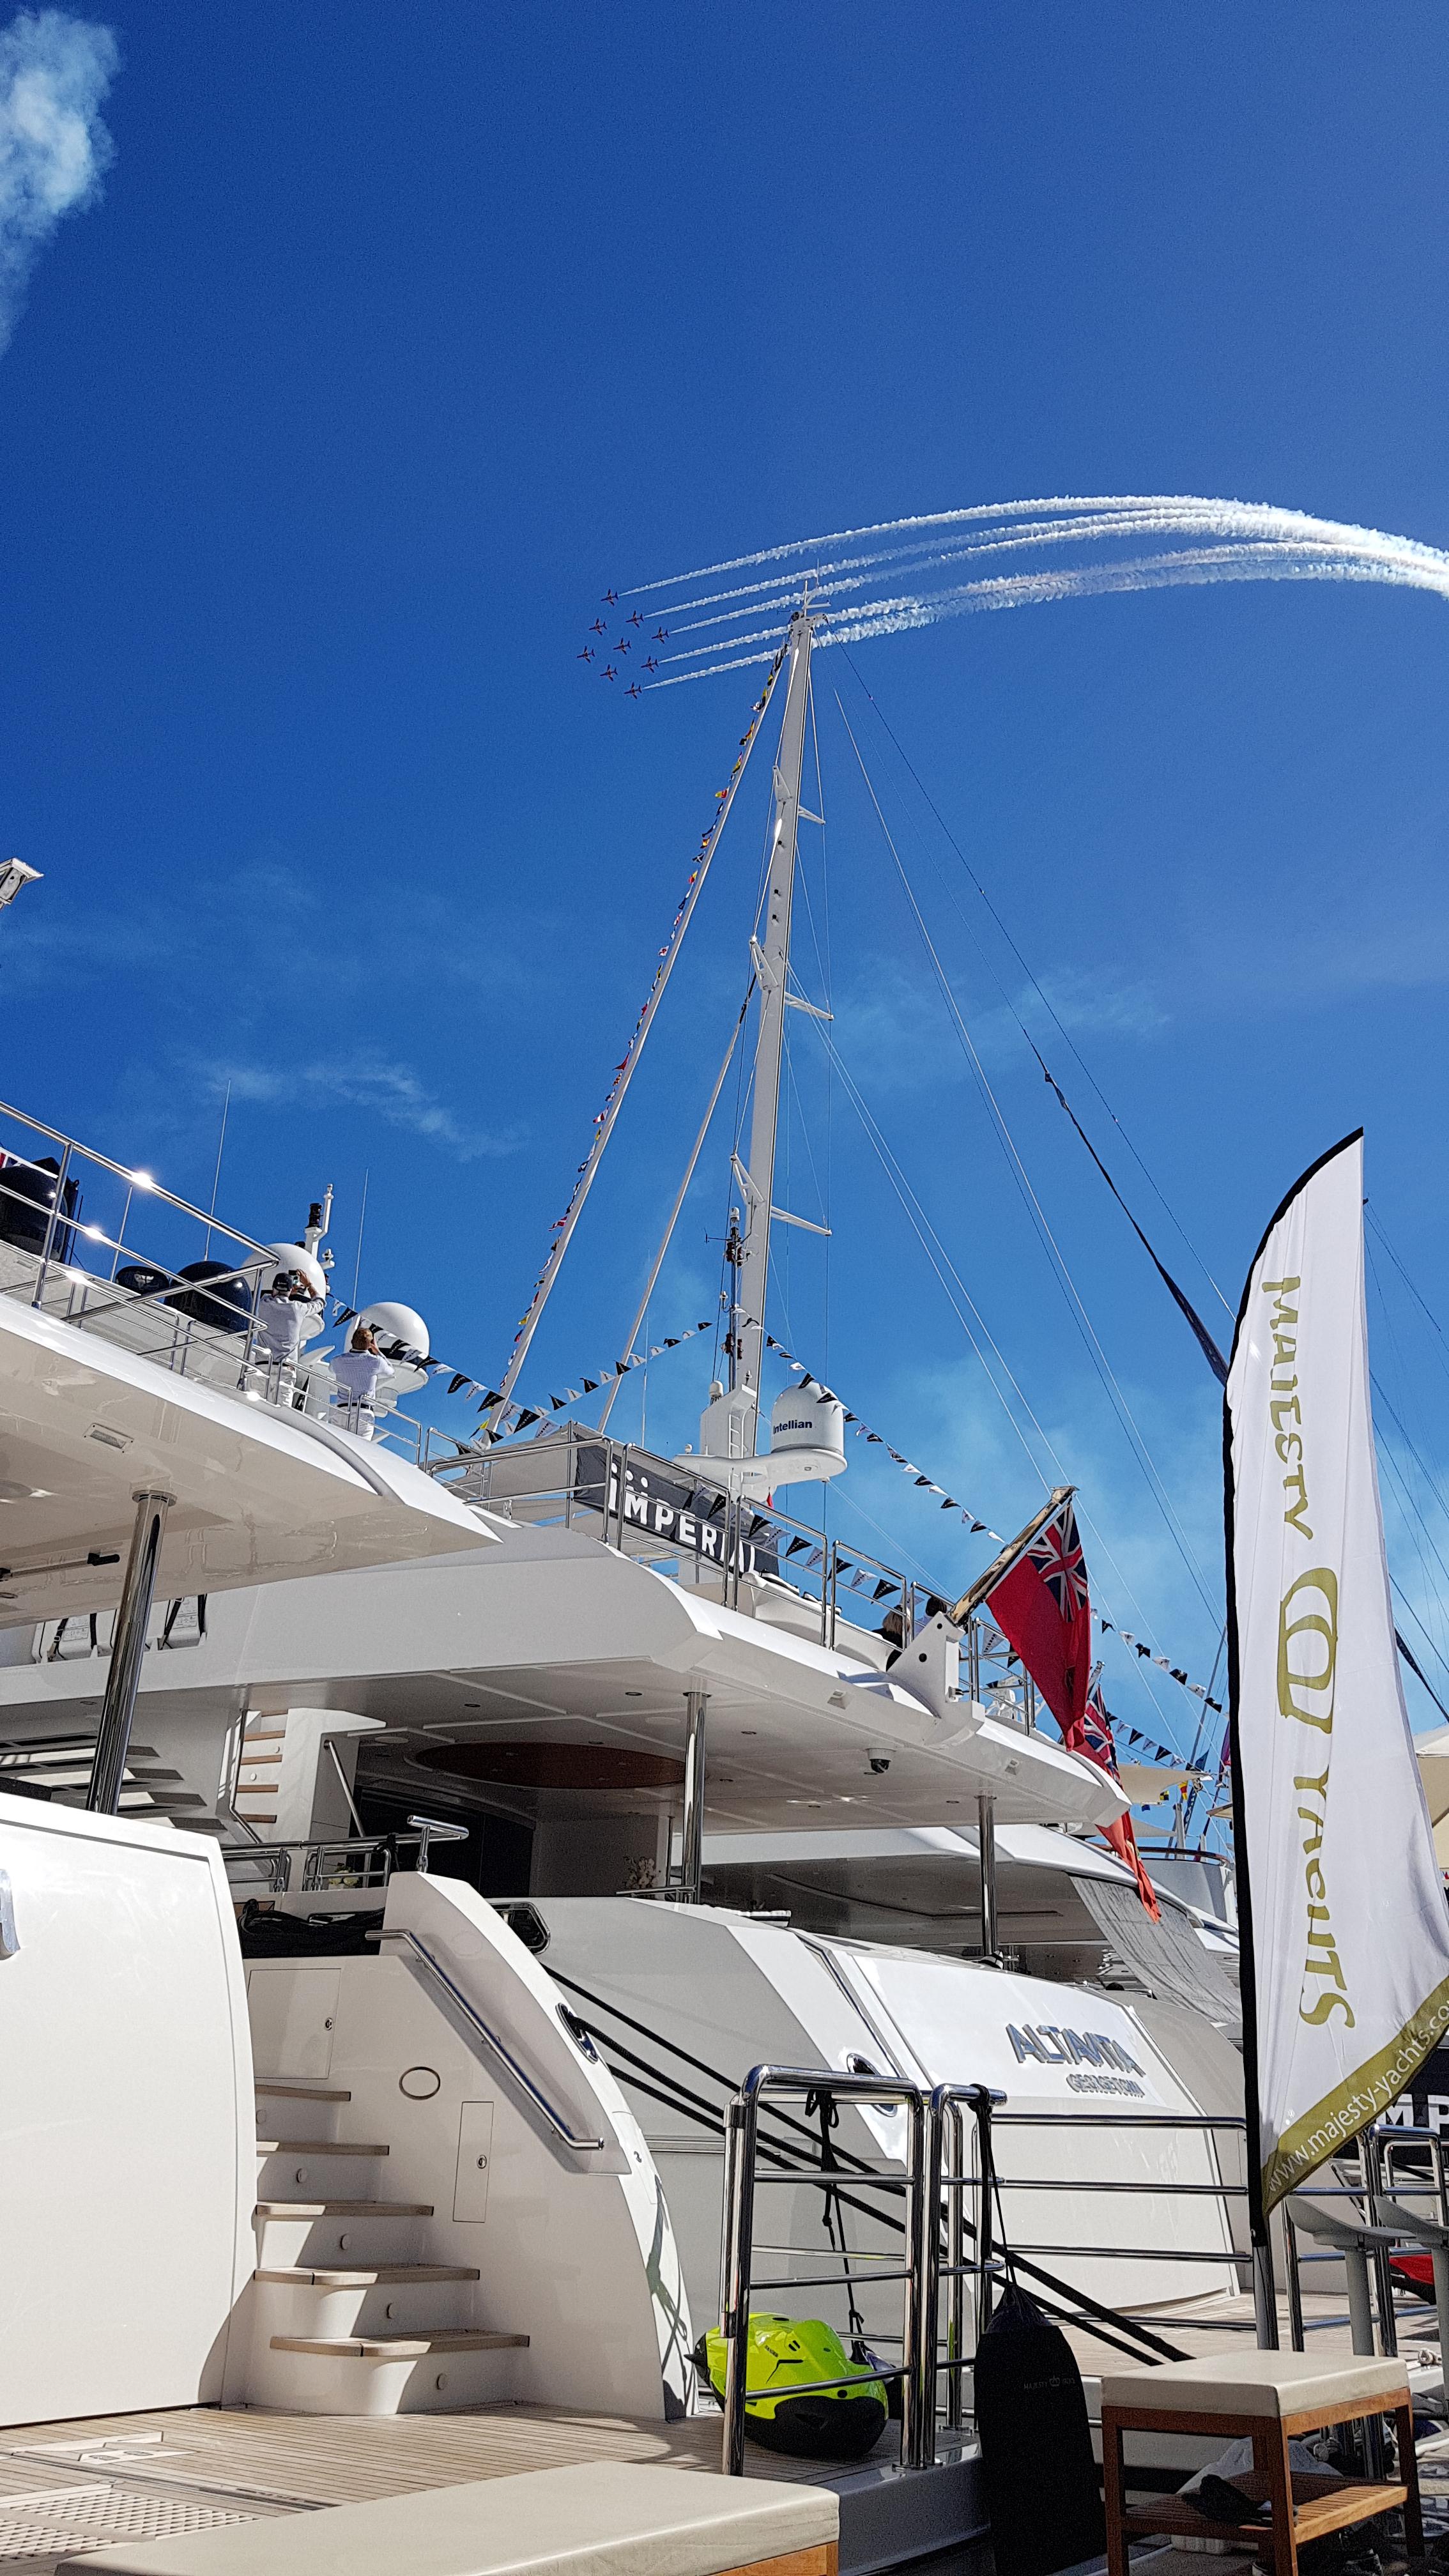 Gulf Craft at the 2018 Monaco Yacht Show-Day 2.jpg